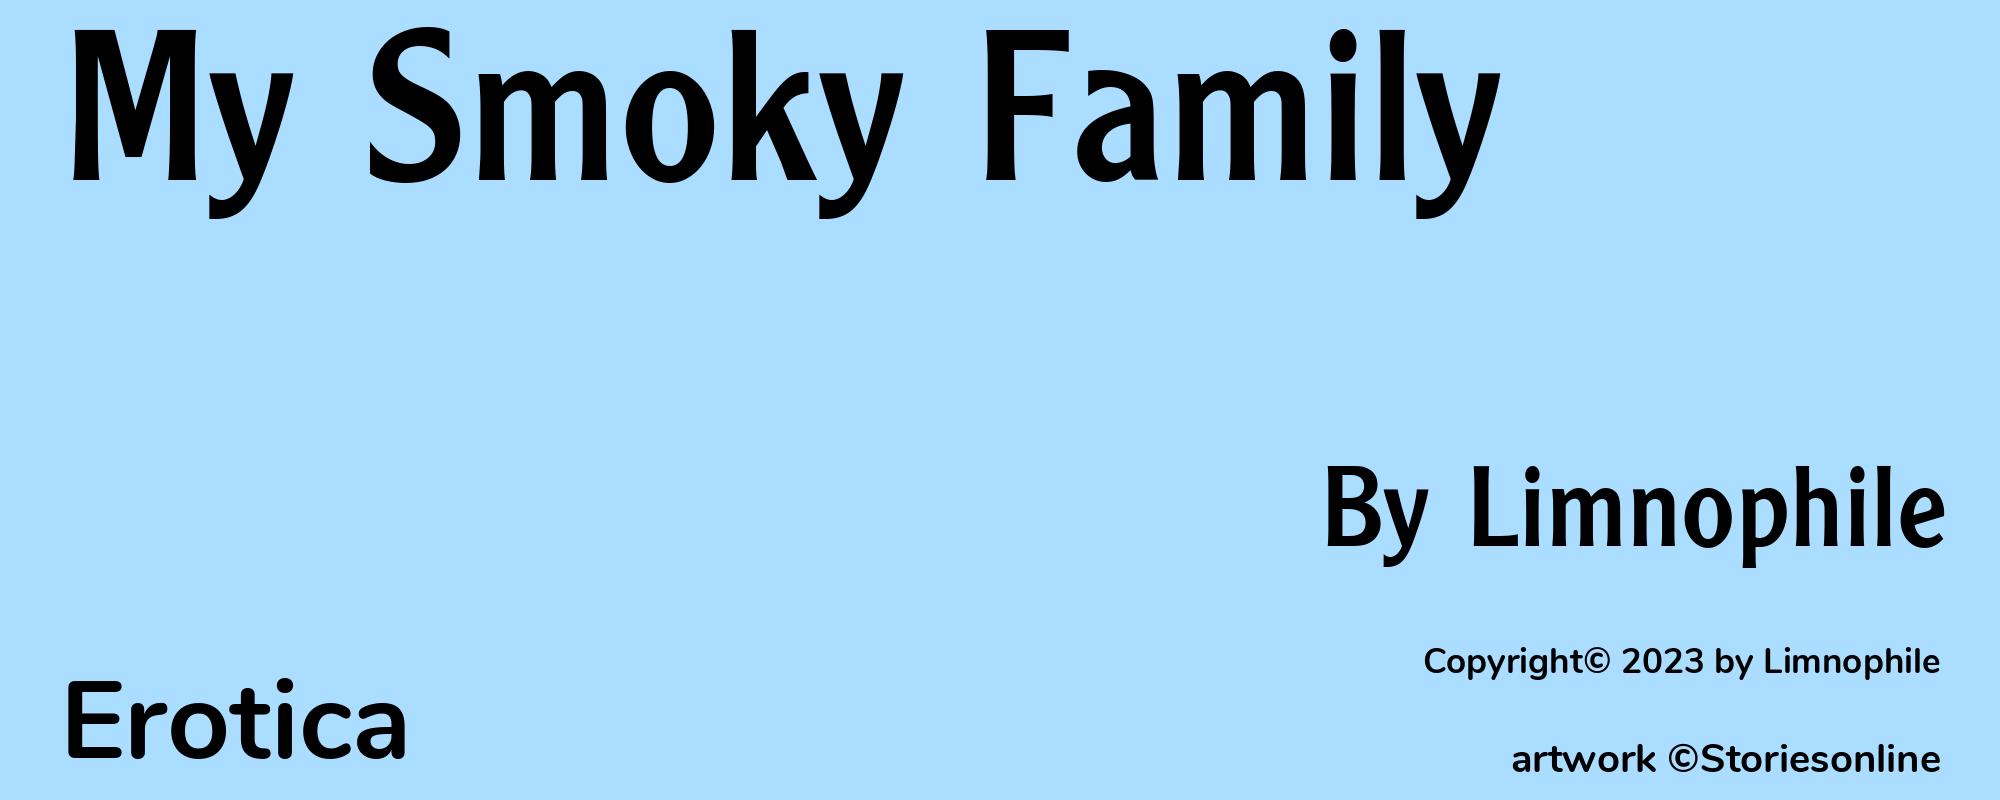 My Smoky Family - Cover